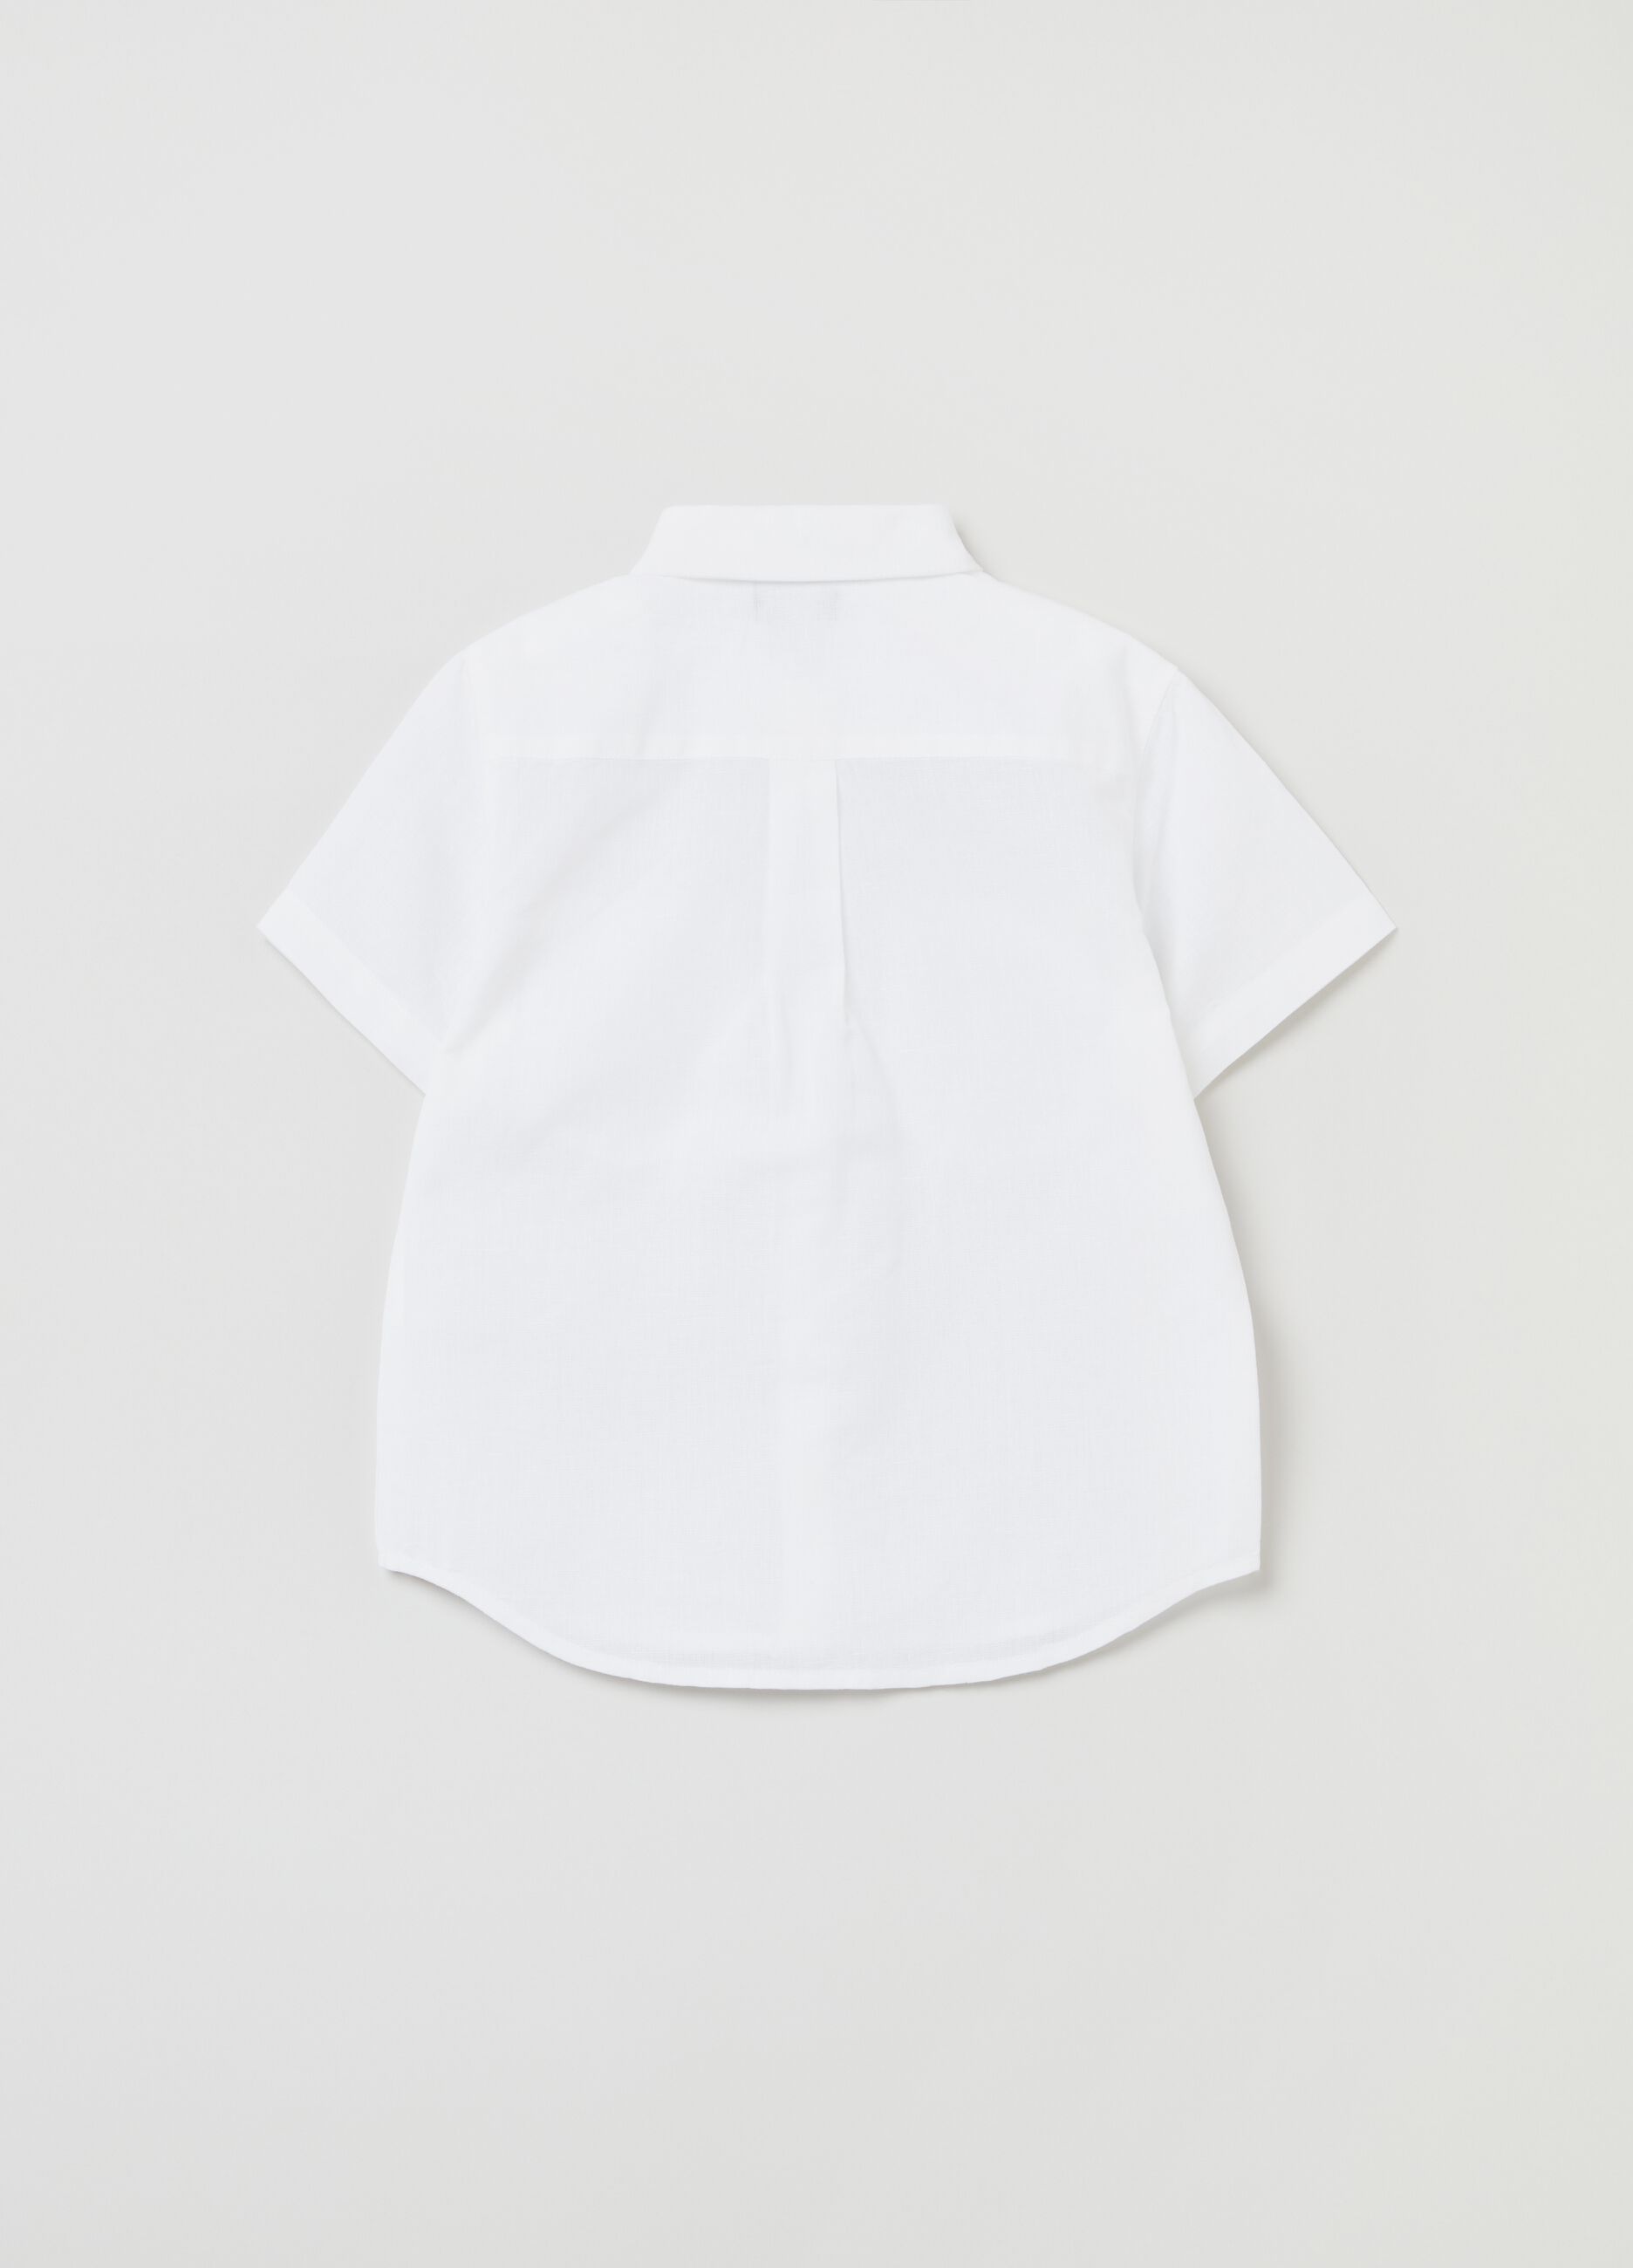 Linen and cotton short-sleeved shirt.